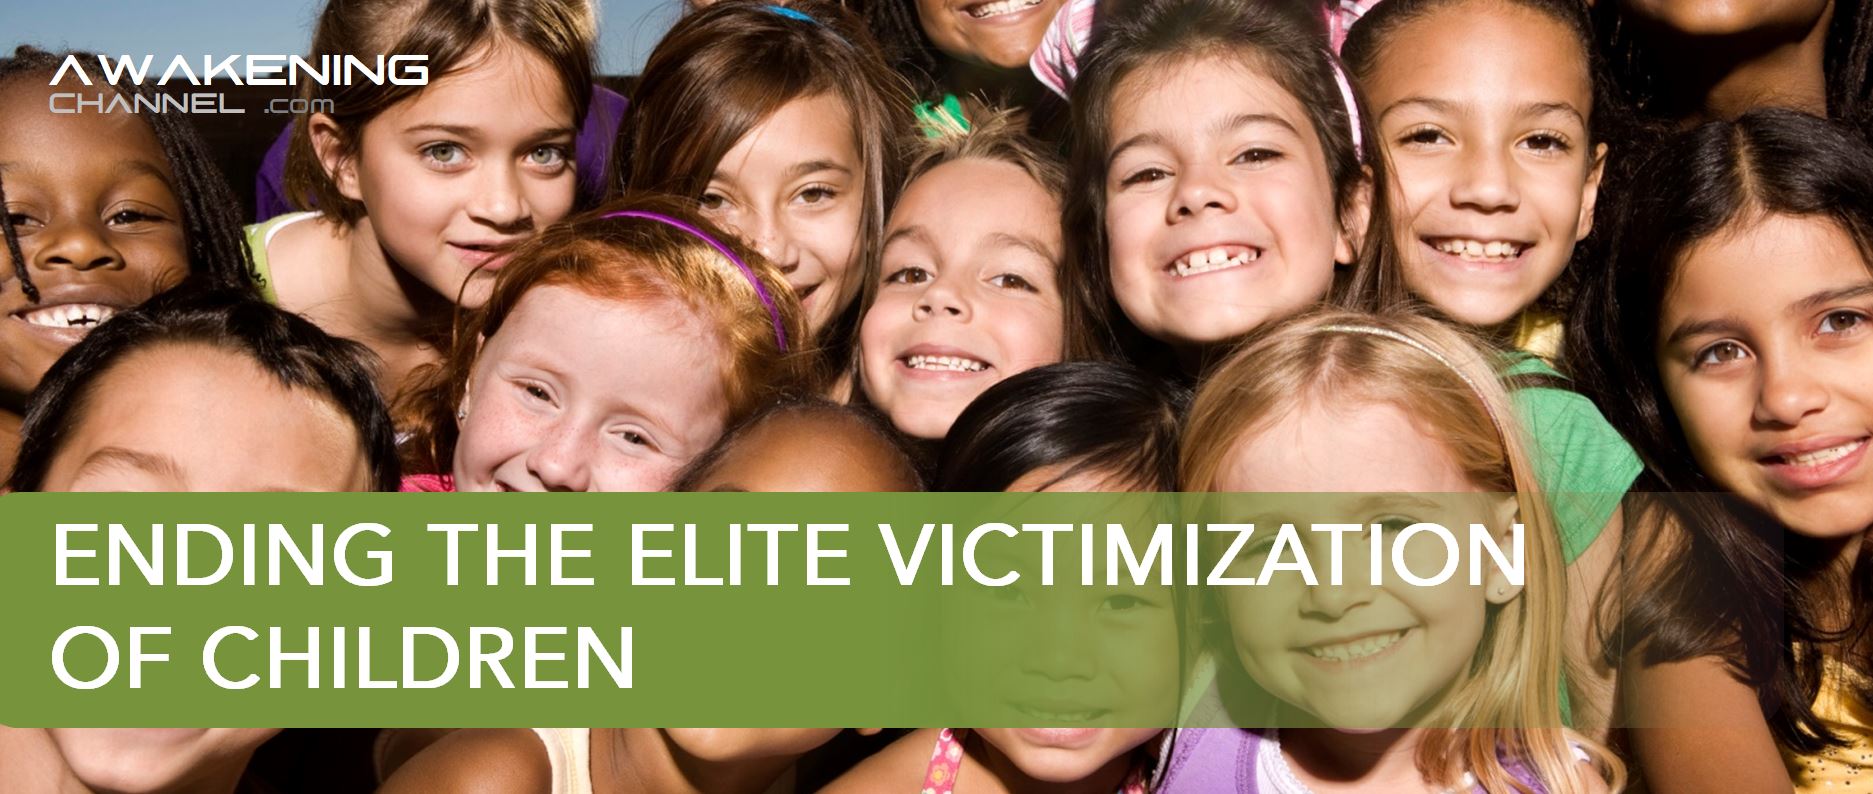 Ending the Elite Victimization of Children